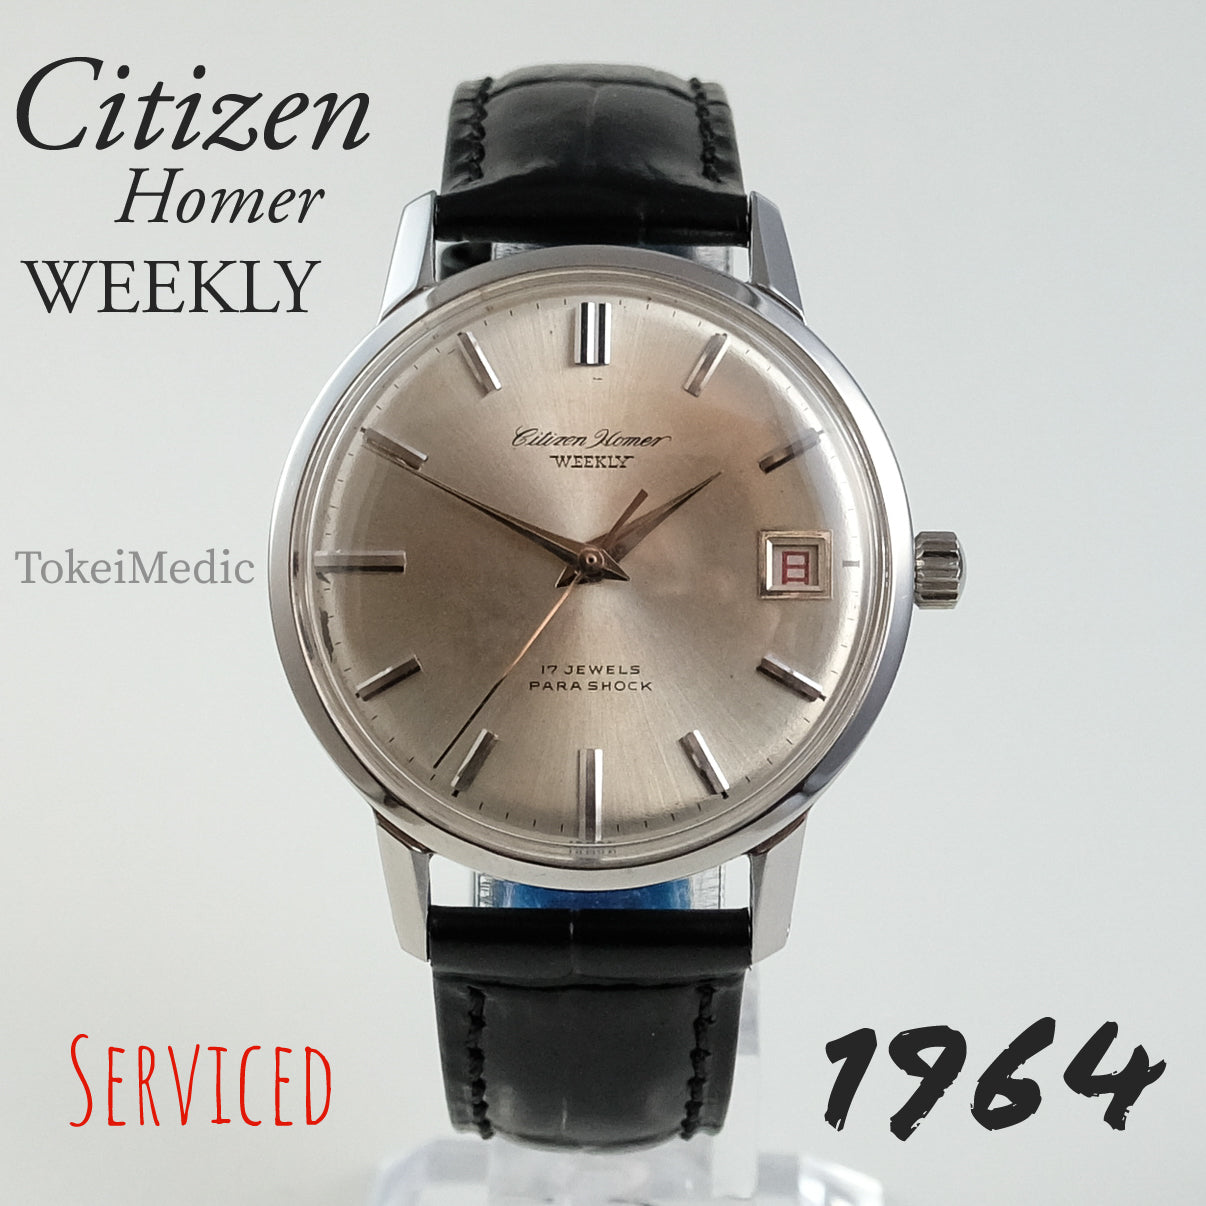 1964 Citizen Homer Weekly HW150801